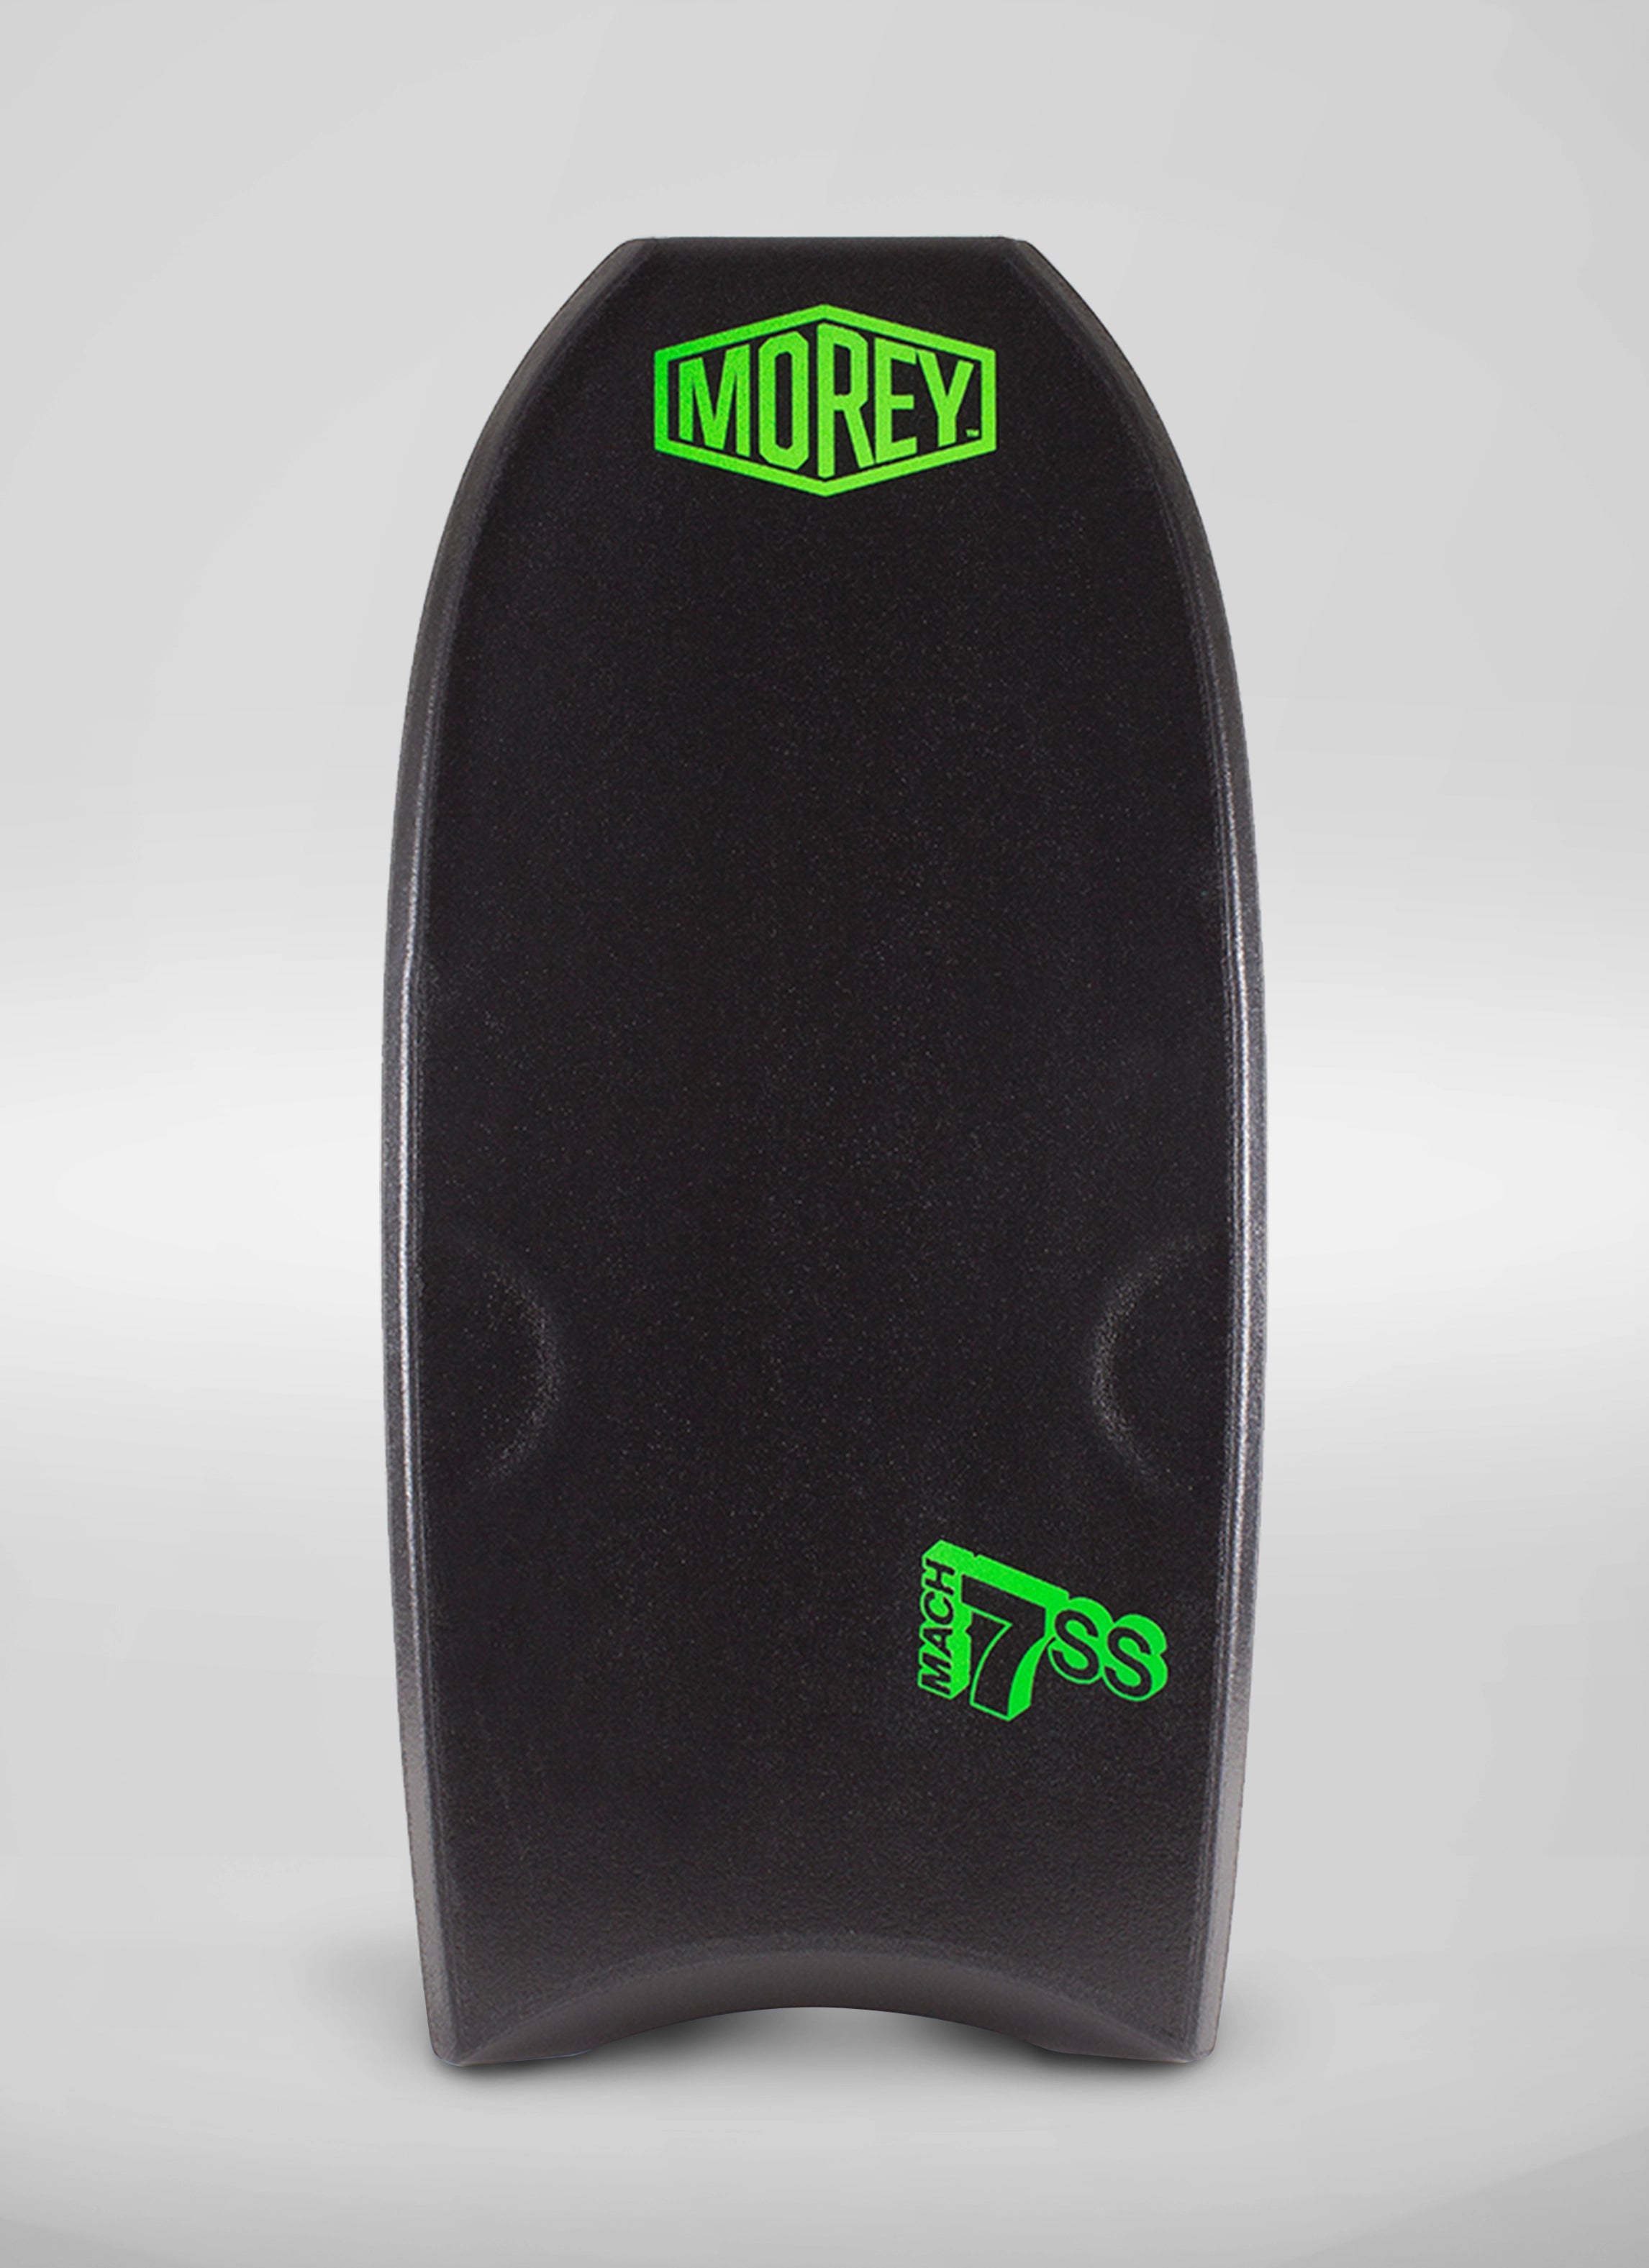 Morey Bodyboards MACH 7-SS – Morey BodyBoards